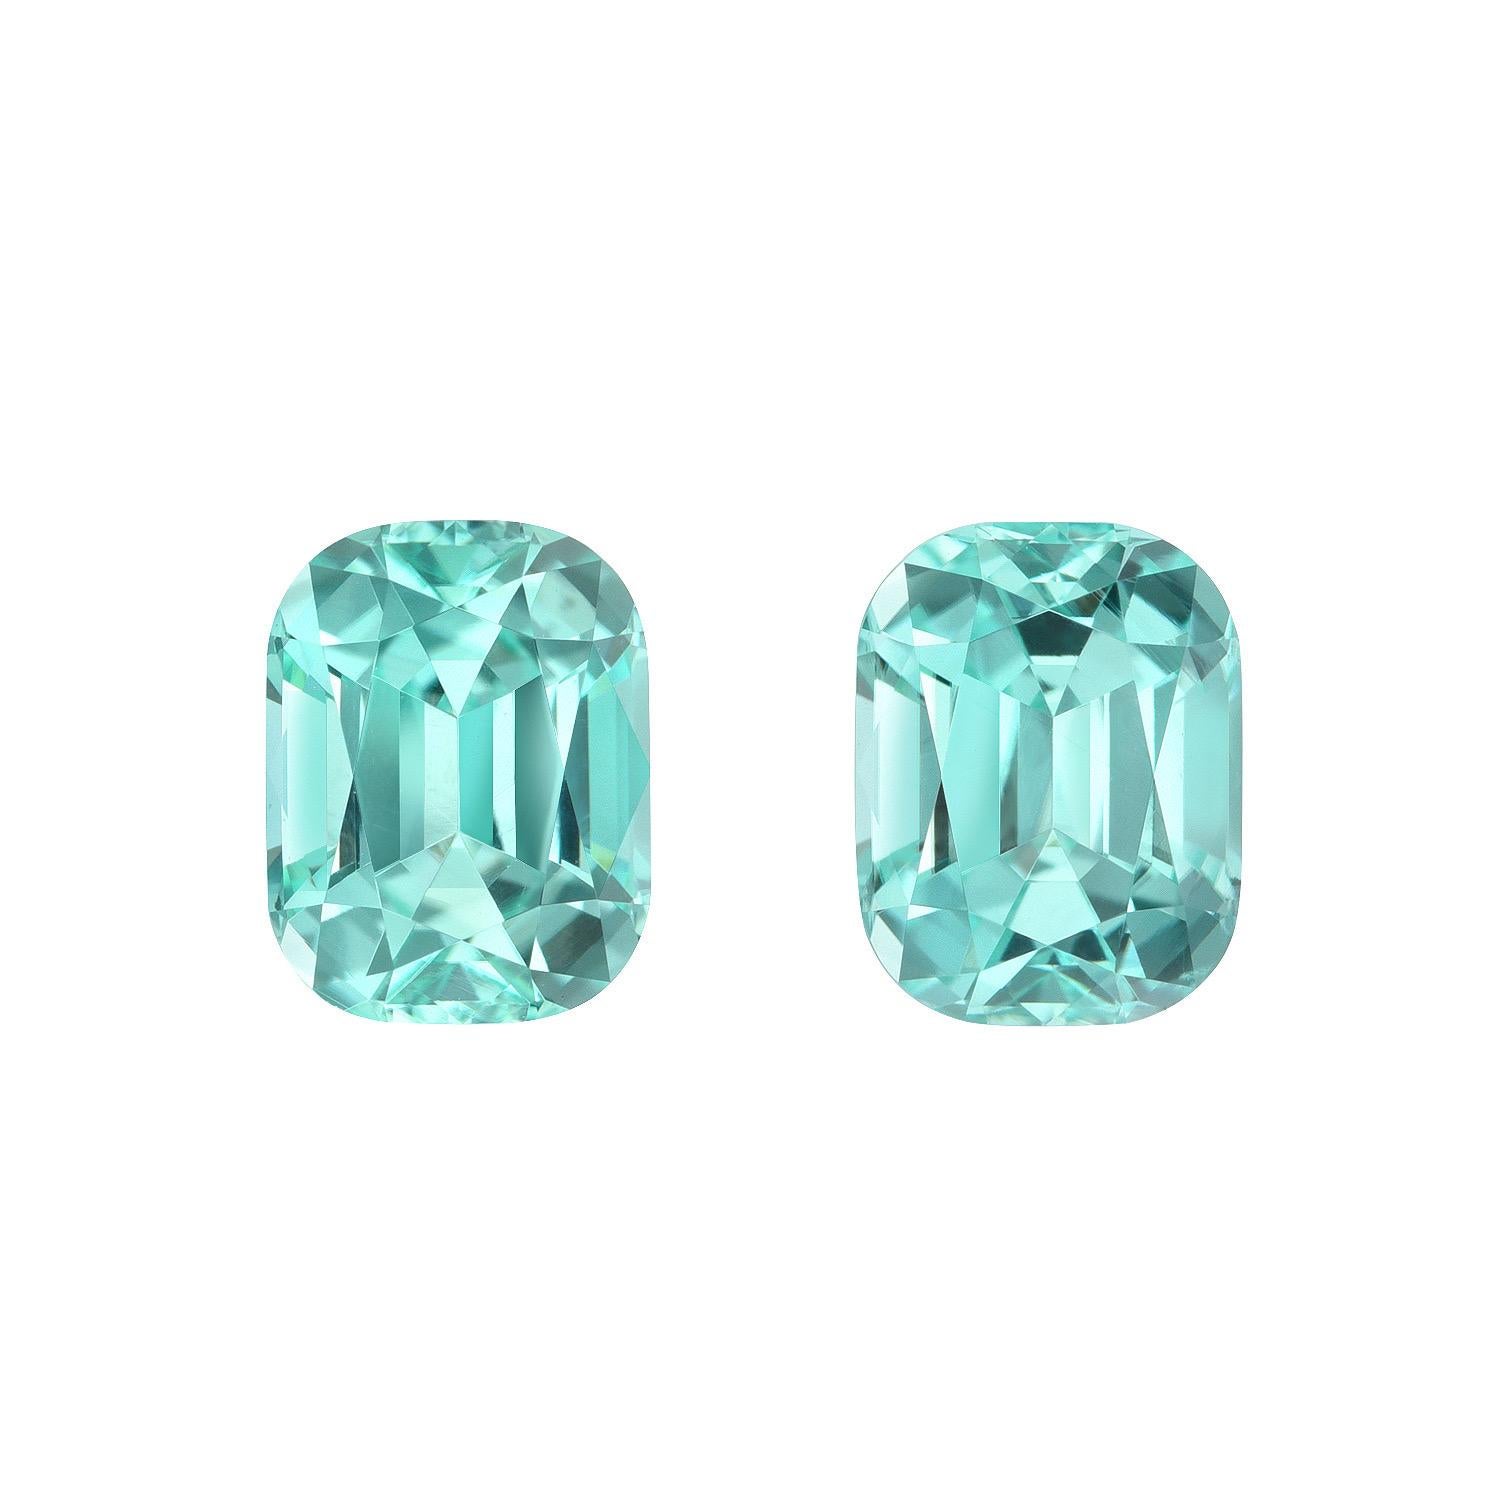 Contemporary Blue Green Tourmaline Earring Gemstone Pair 3.61 Carat Cushion Loose Gems